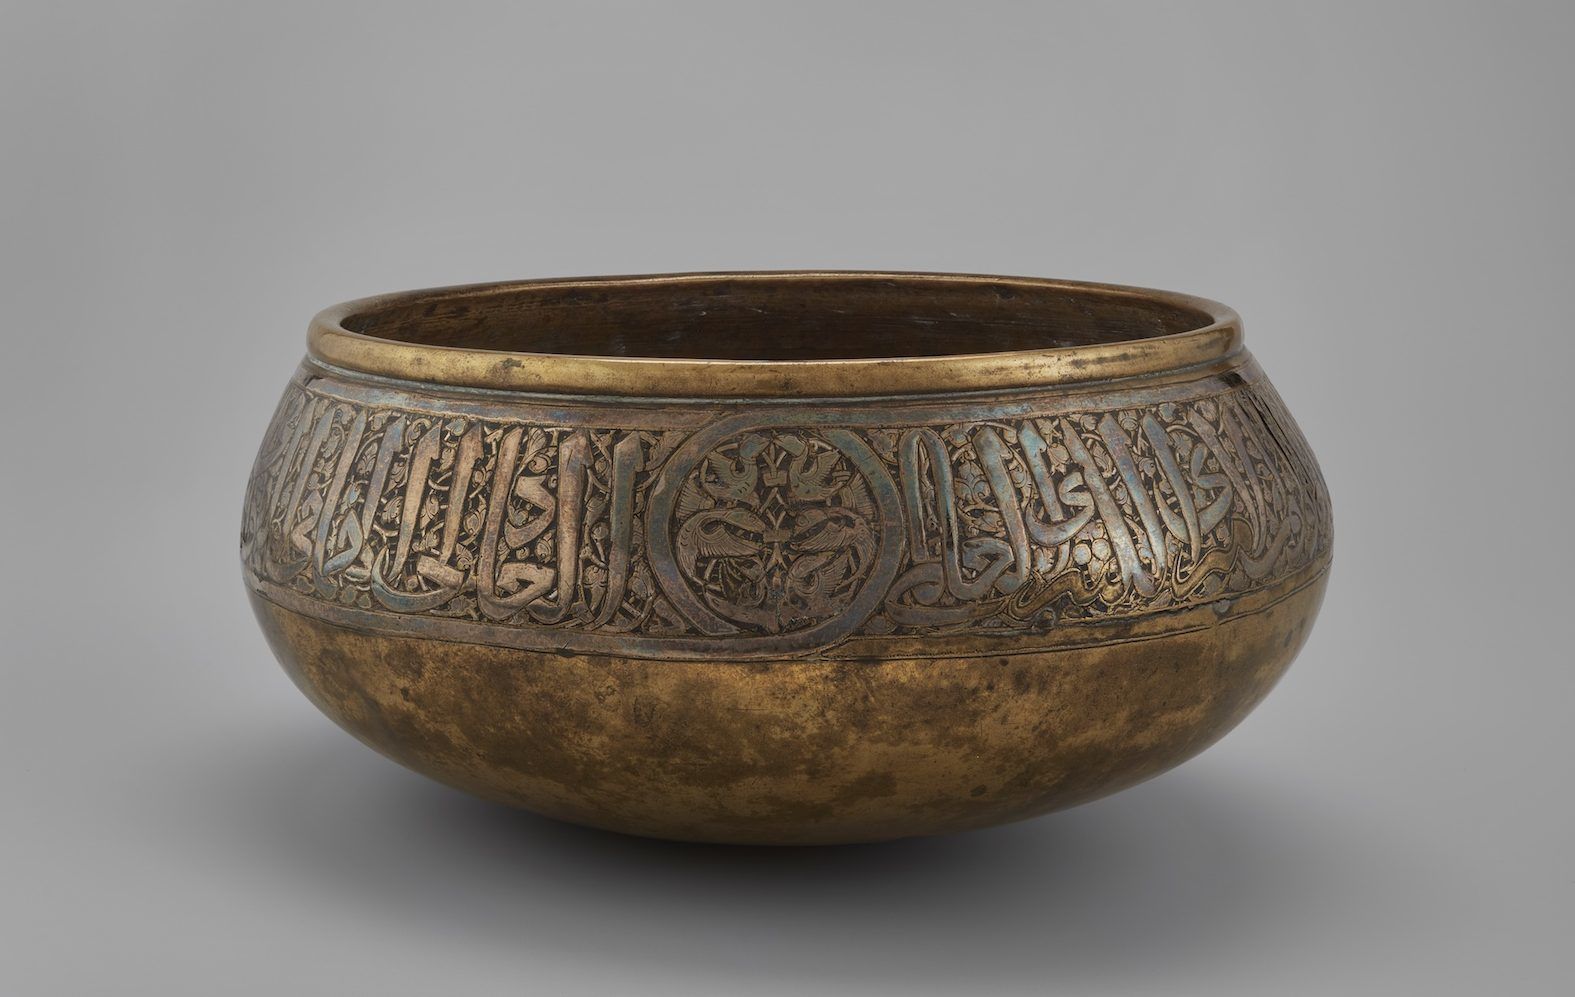 Caravans of Gold, Fragments in Time: Art, Culture, and Exchange across  Medieval Saharan Africa: Block Museum - Northwestern University